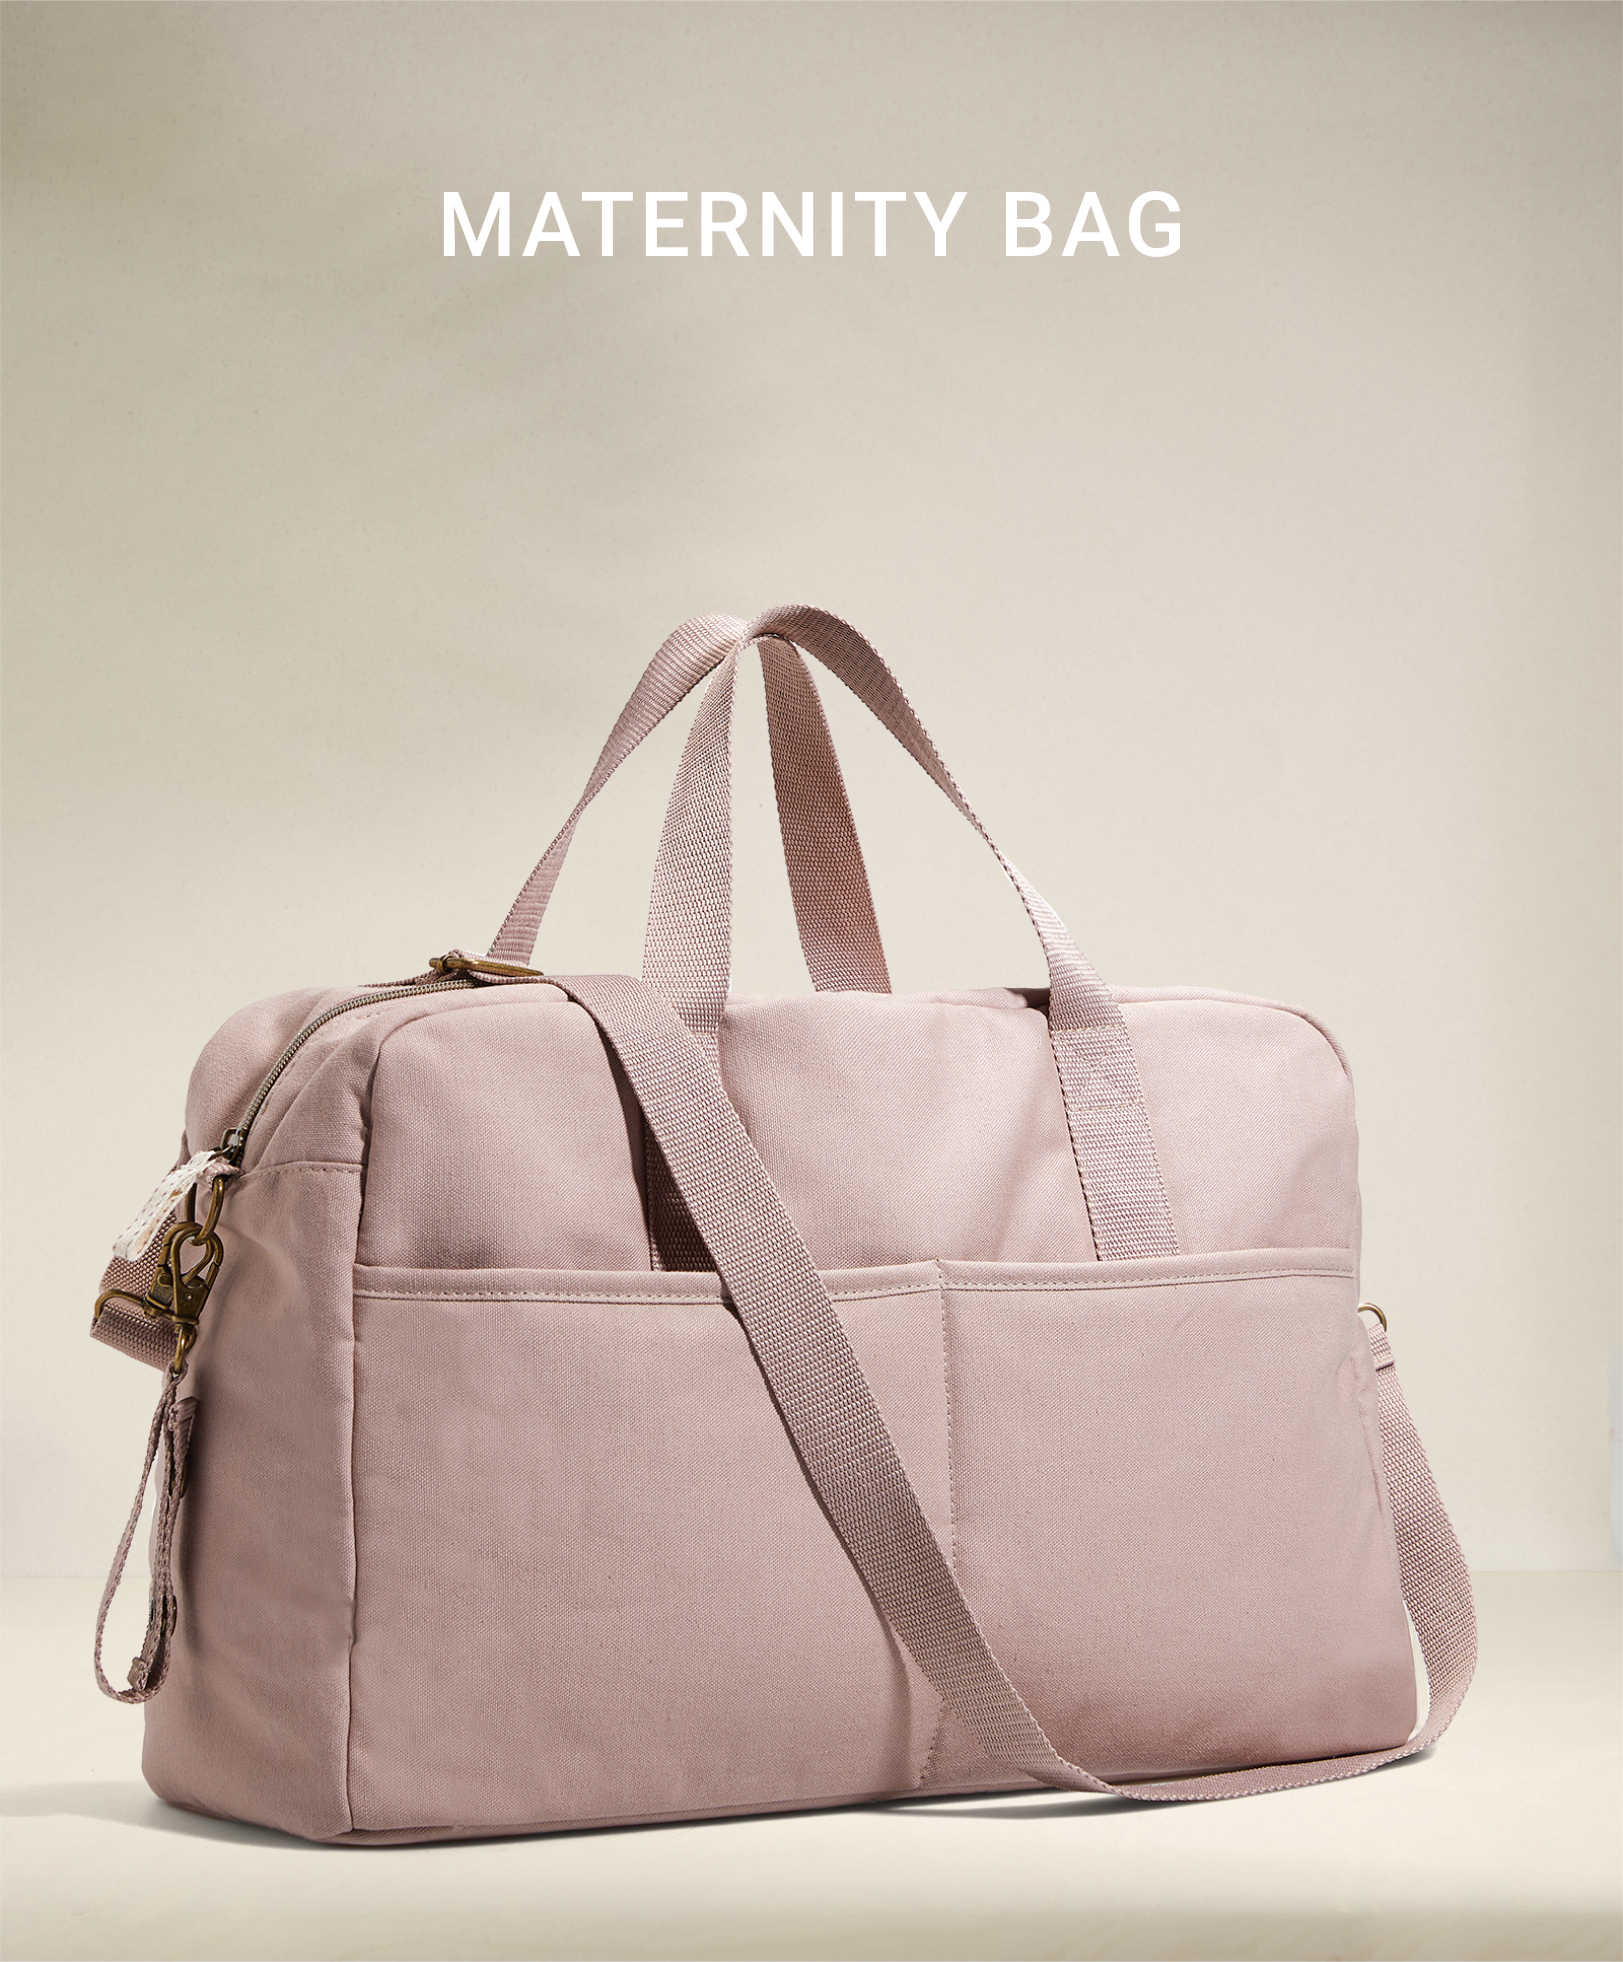 Canvas pram maternity bag